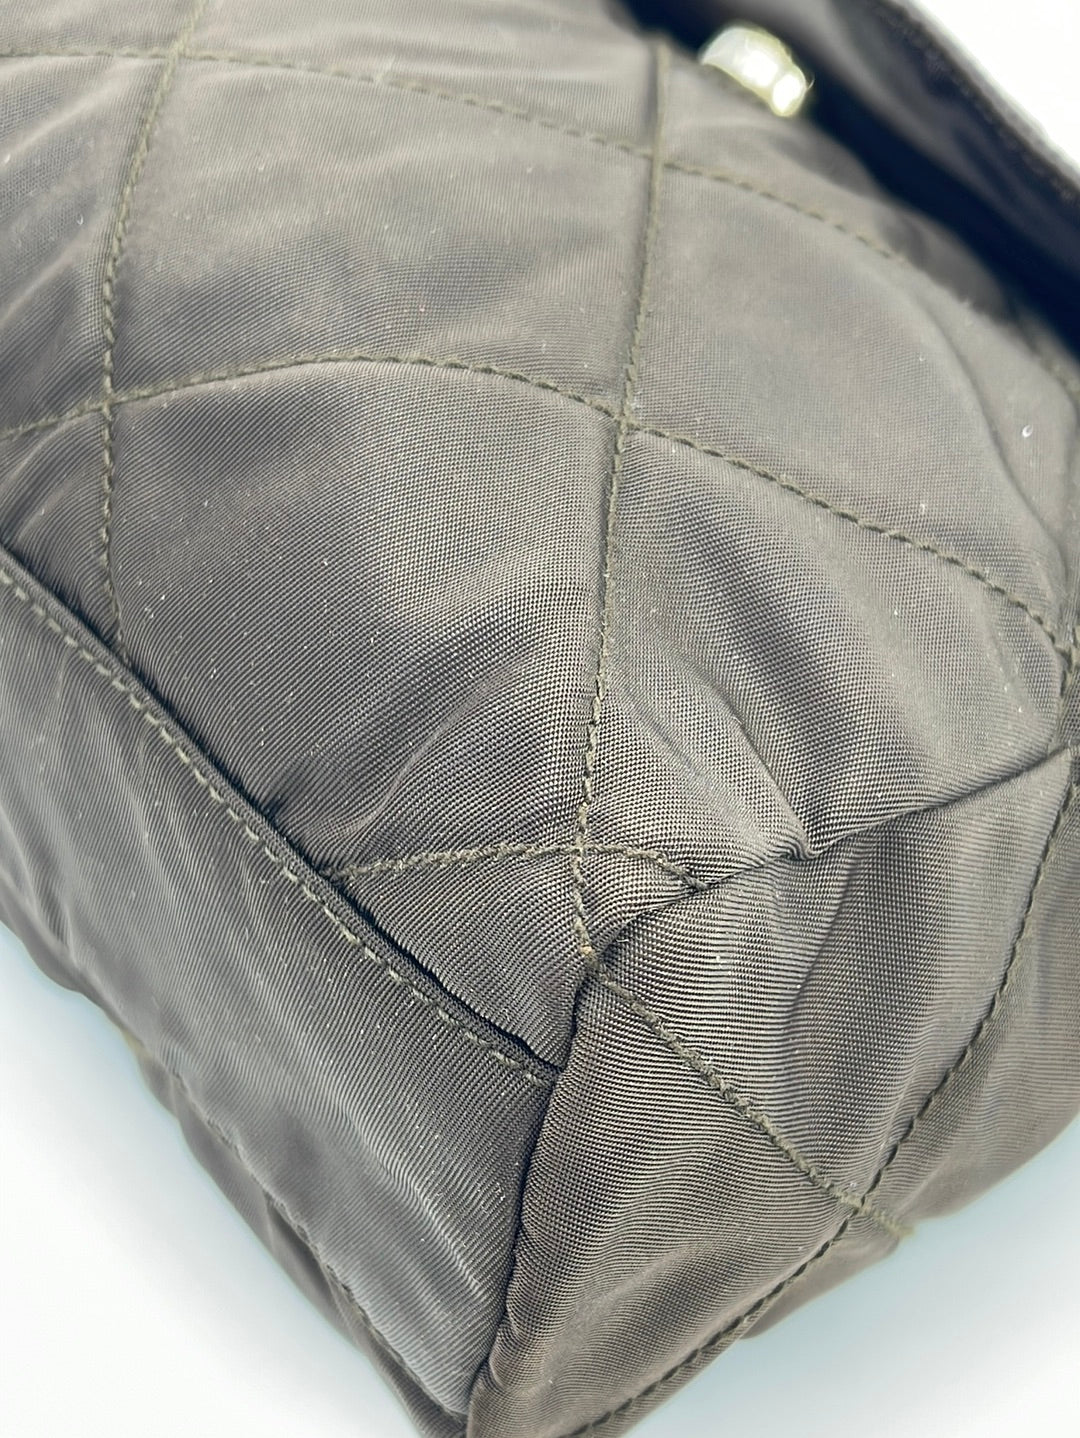 Preloved Prada Brown Quilted Tessuto Flap Bag 32 051223 $100 OFF